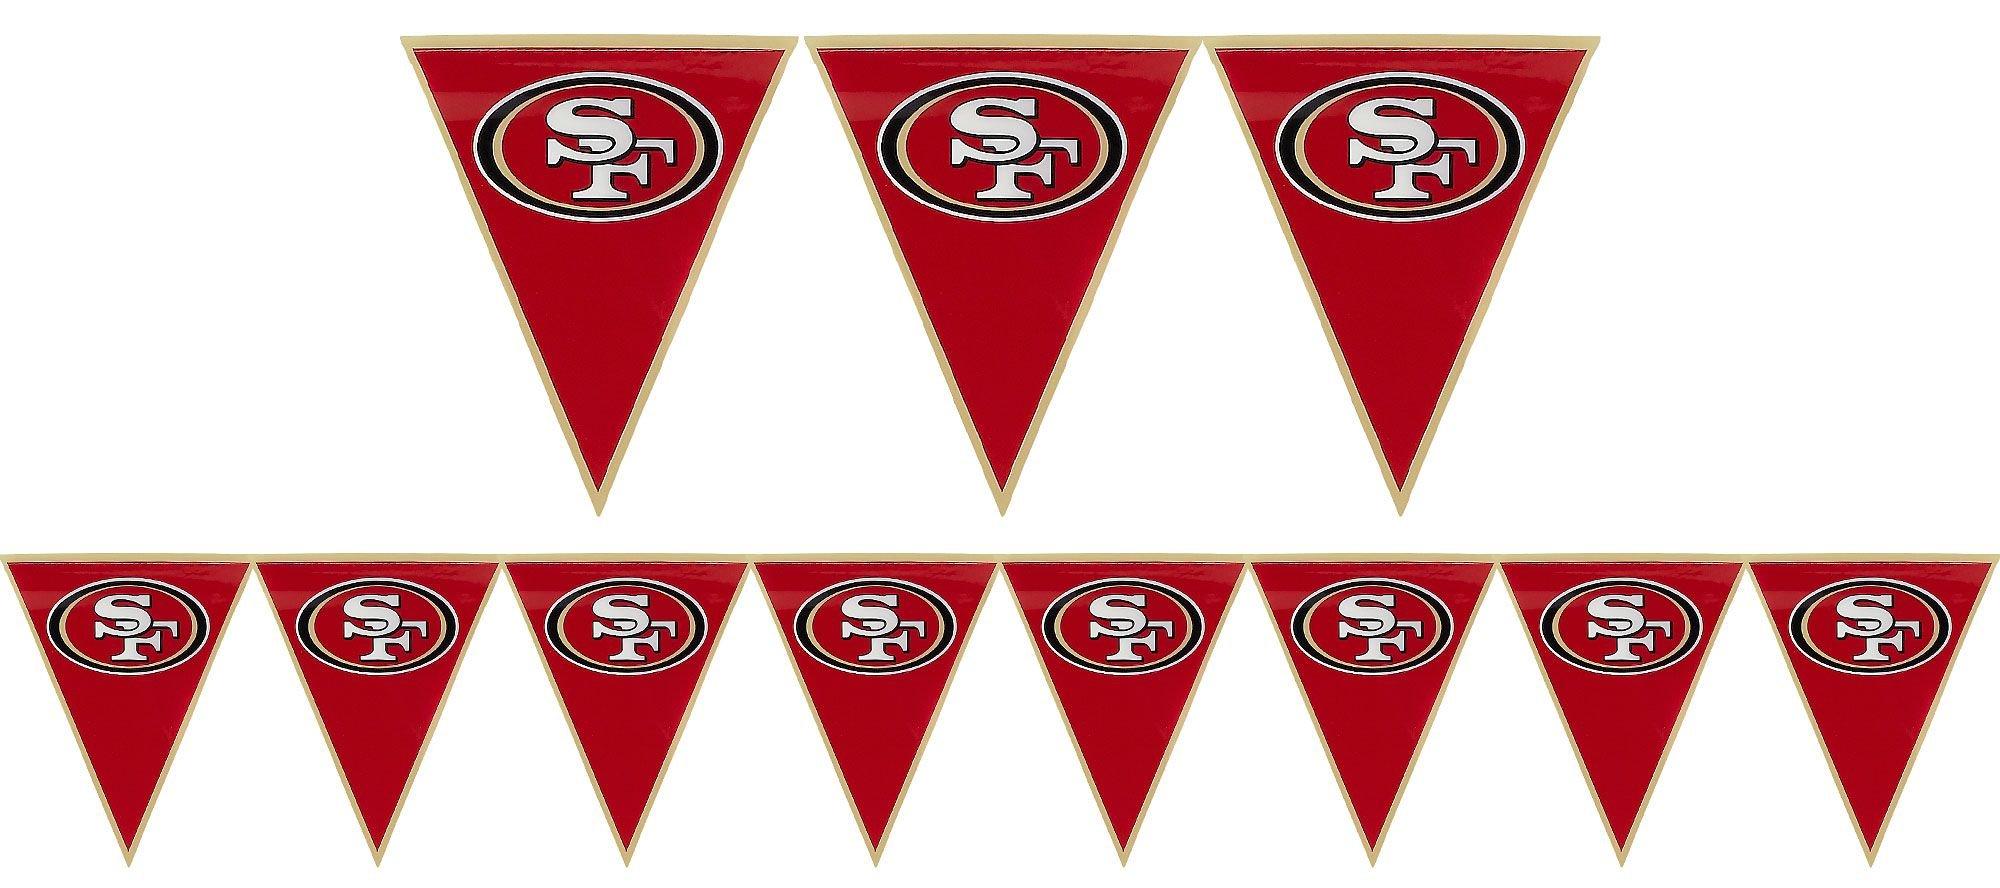 San Francisco 49ers Pennant Banner